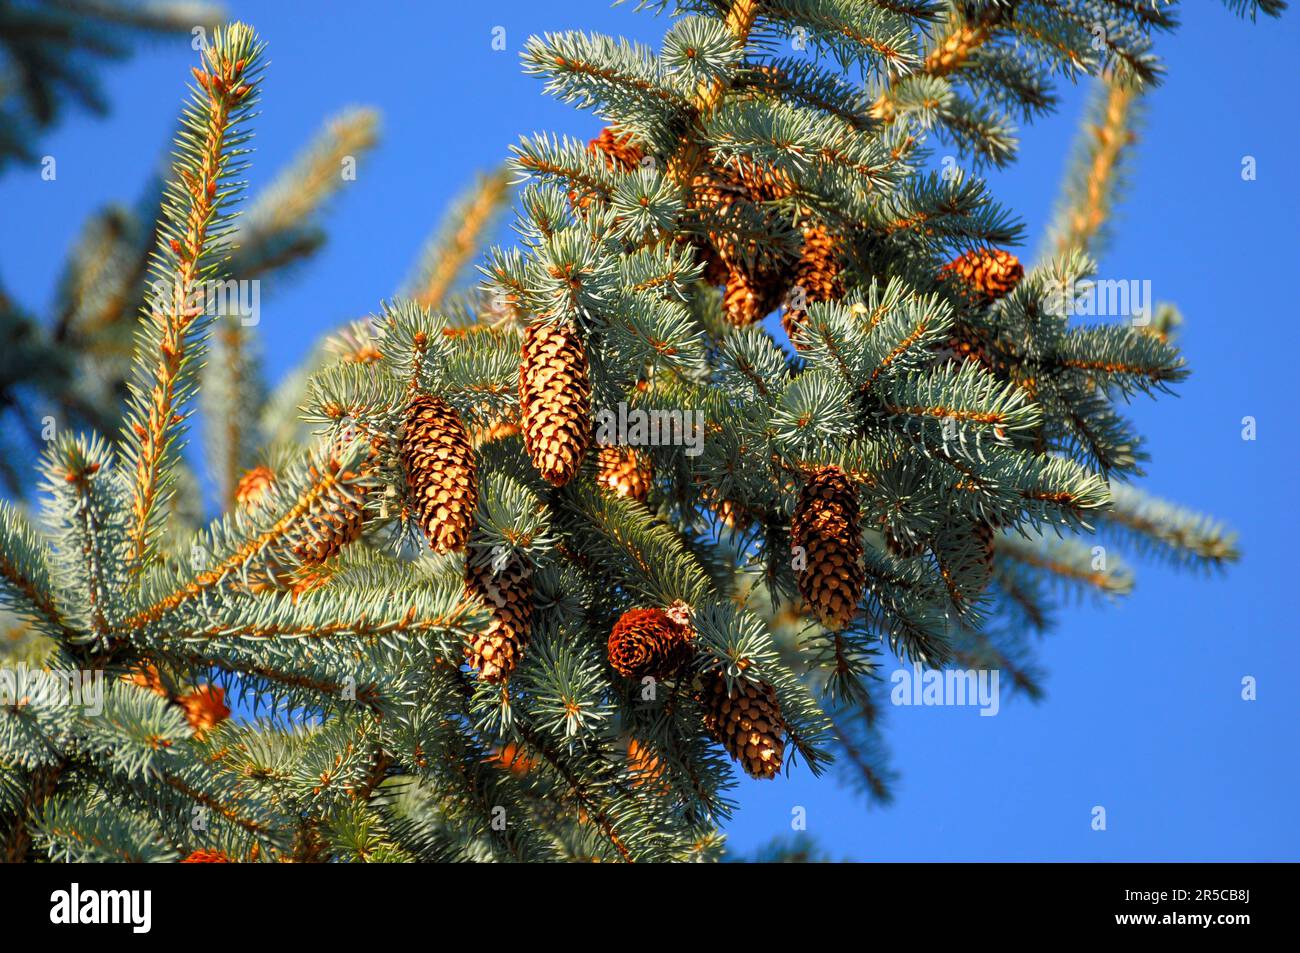 White fir (Abies alba) with fir cones, White fir White fir Stock Photo